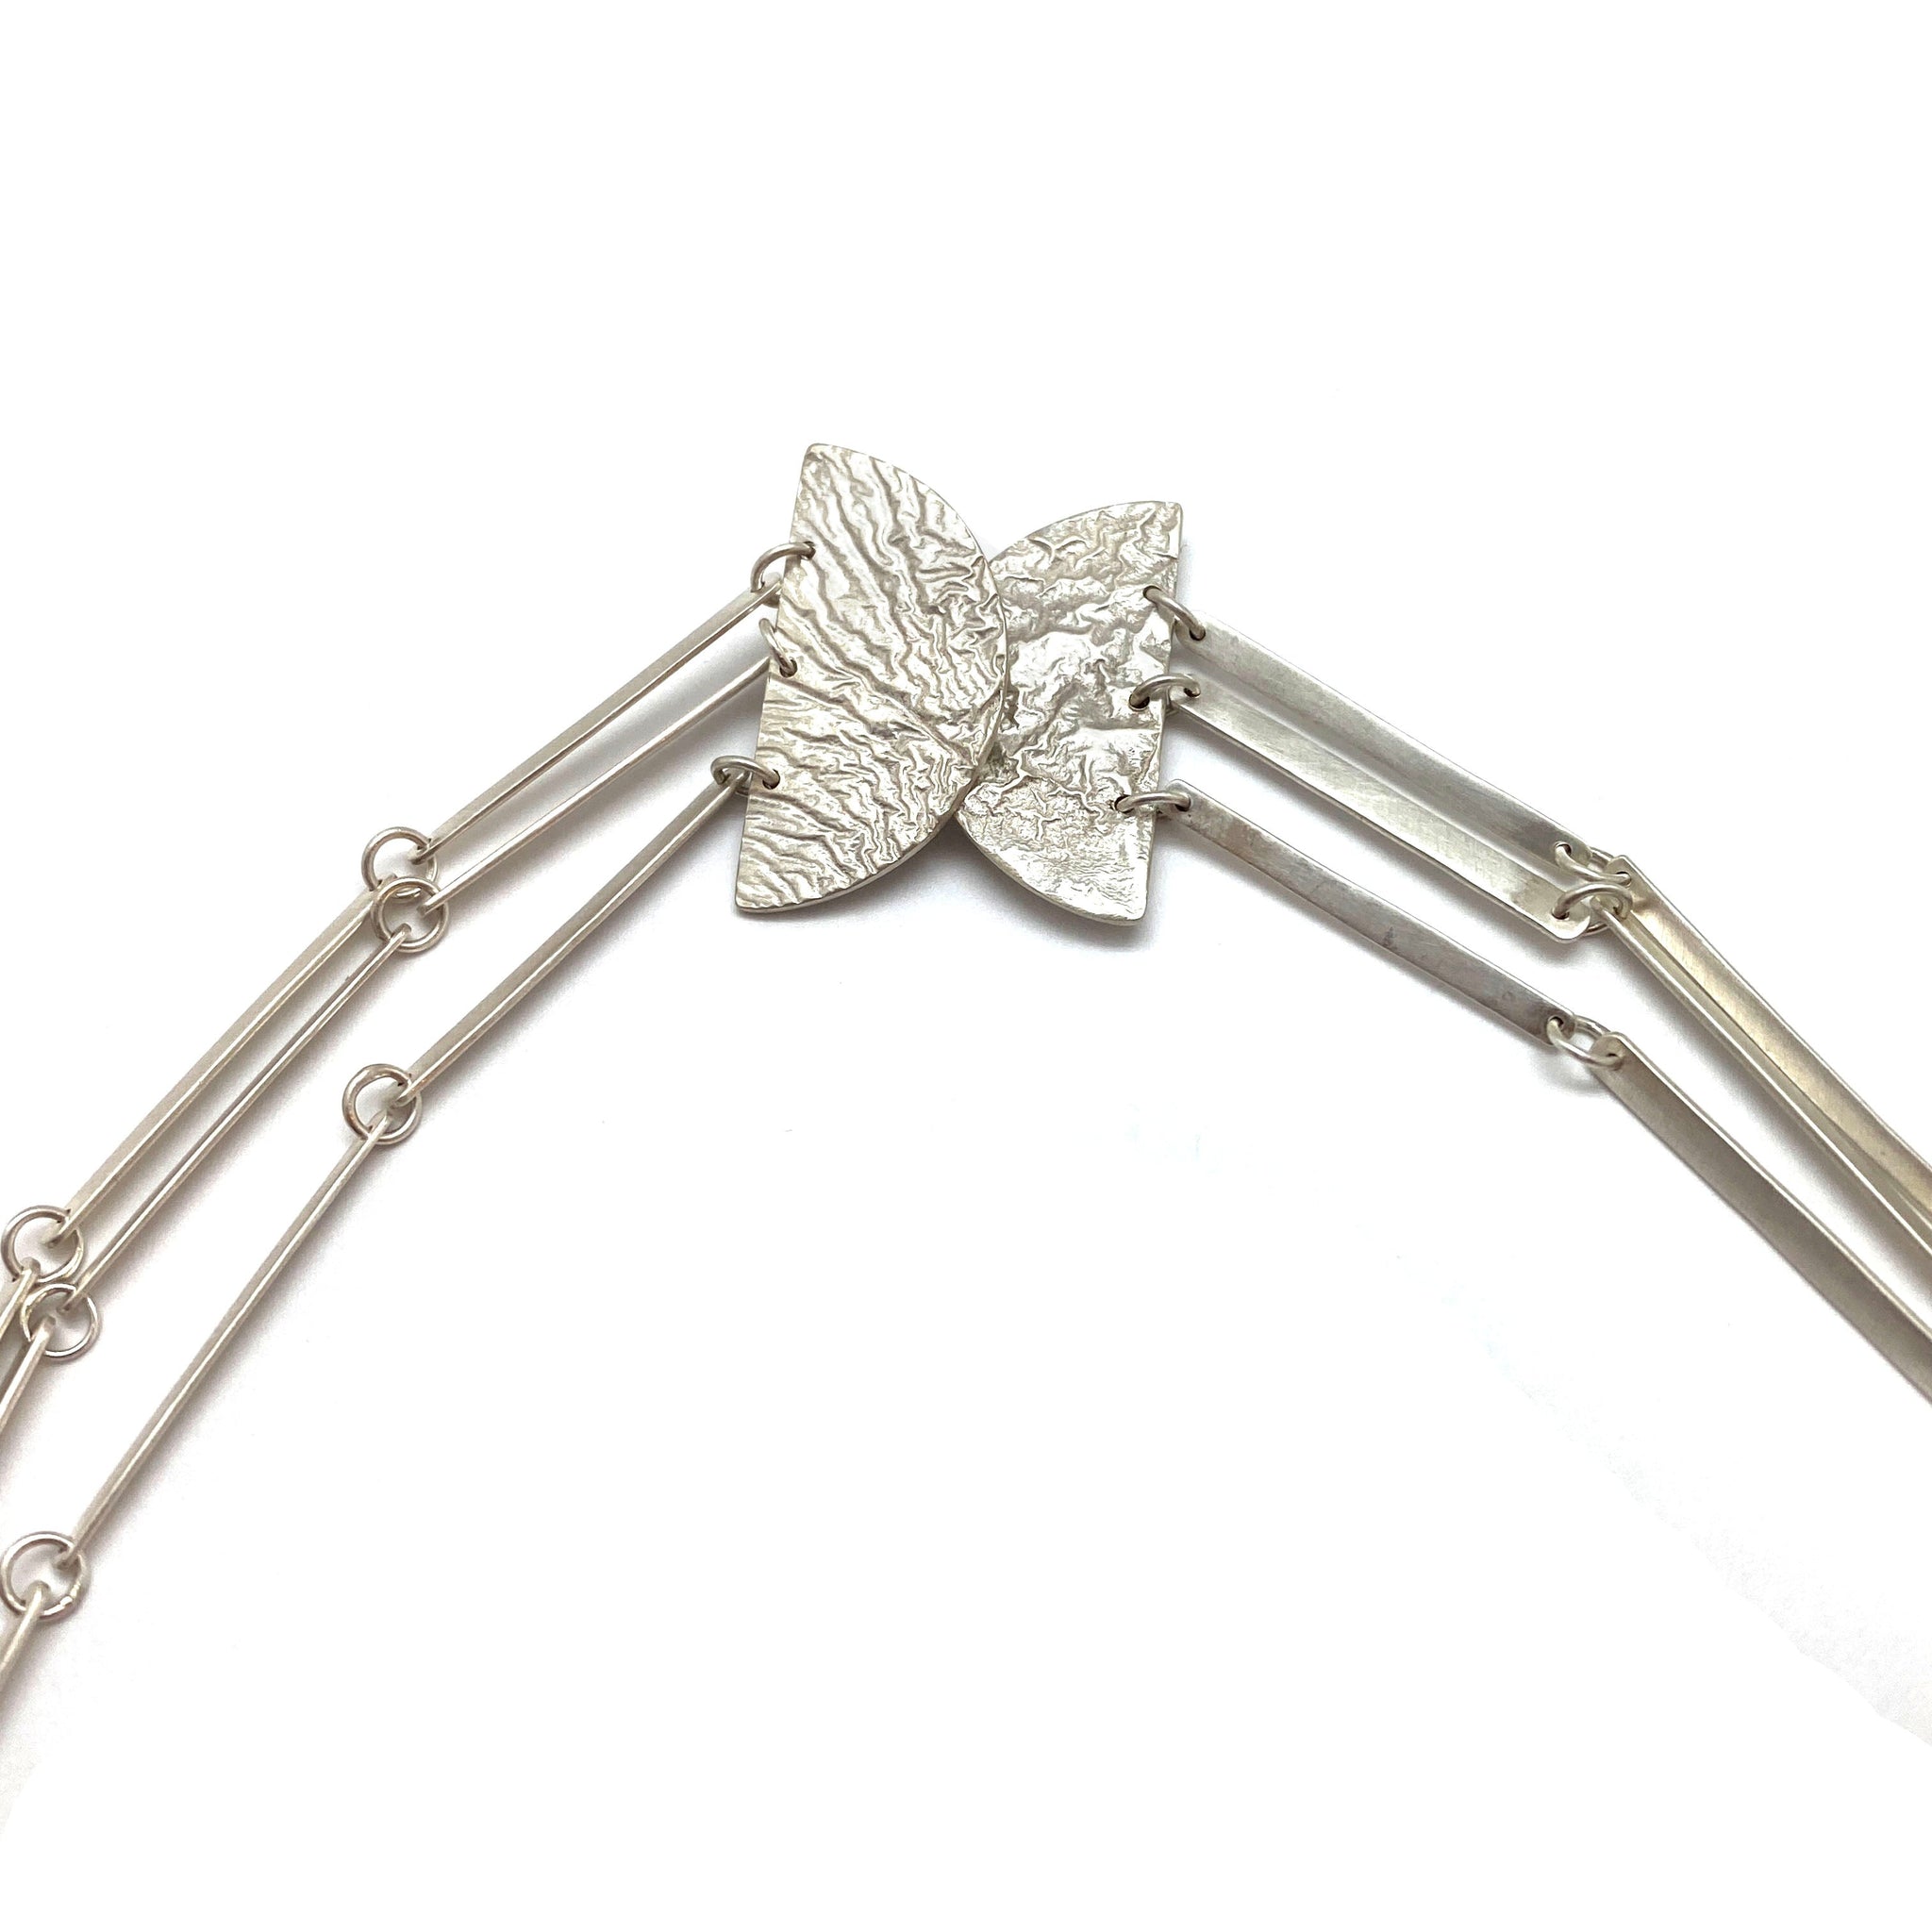 Sterling Silver Spiral Necklace Necklaces Eva Stone Pistachios